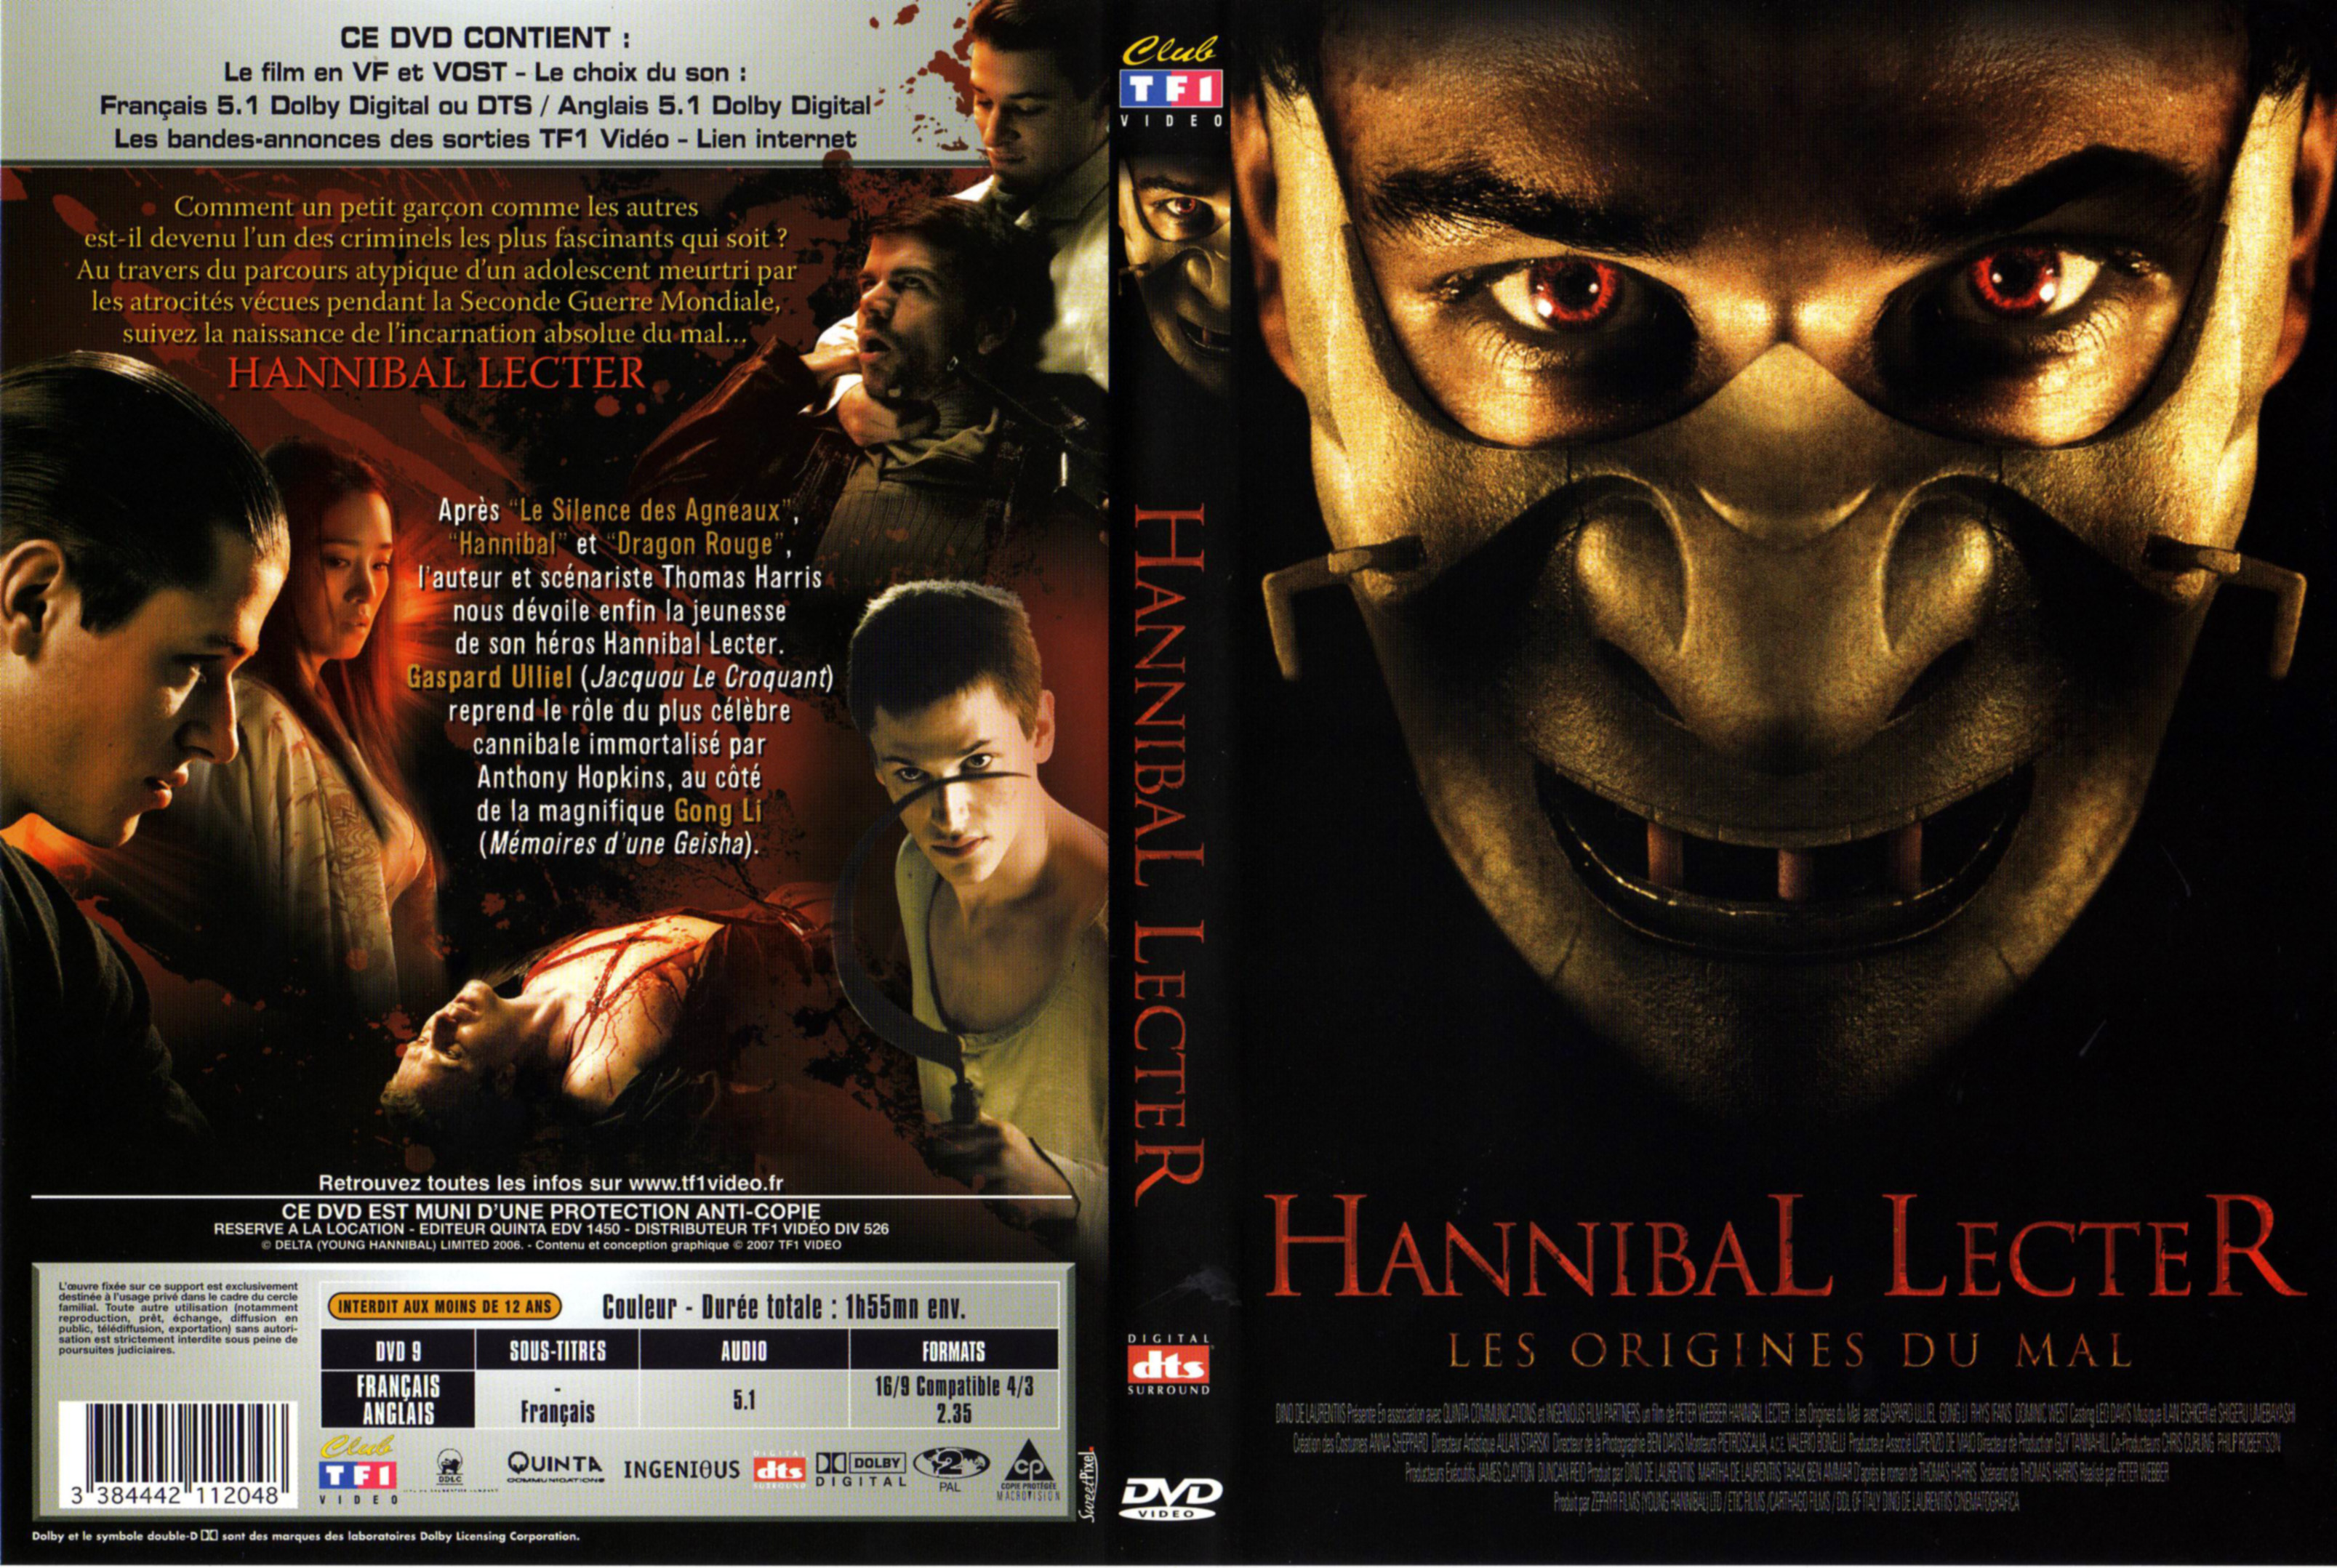 Jaquette DVD Hannibal Lecter les origines du mal